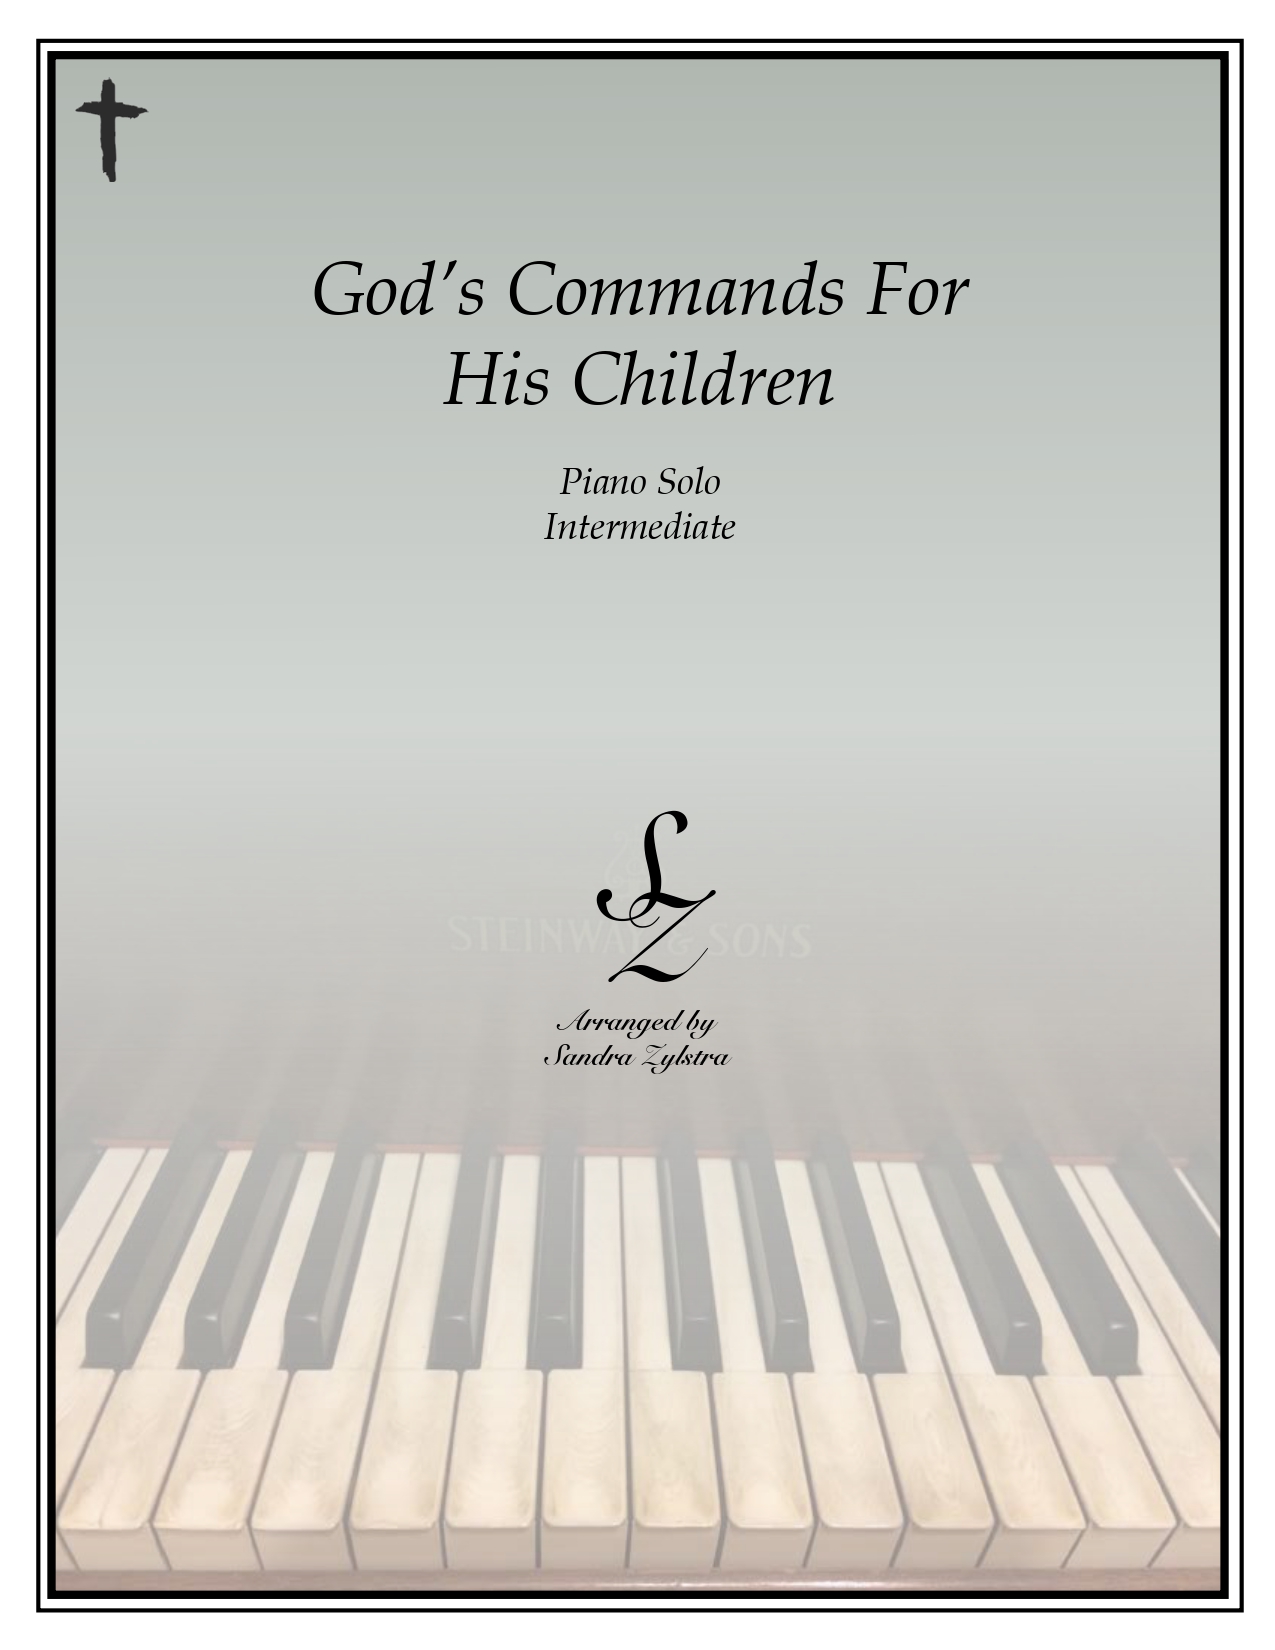 Gods Commands For His Children intermediate piano cover page 00011